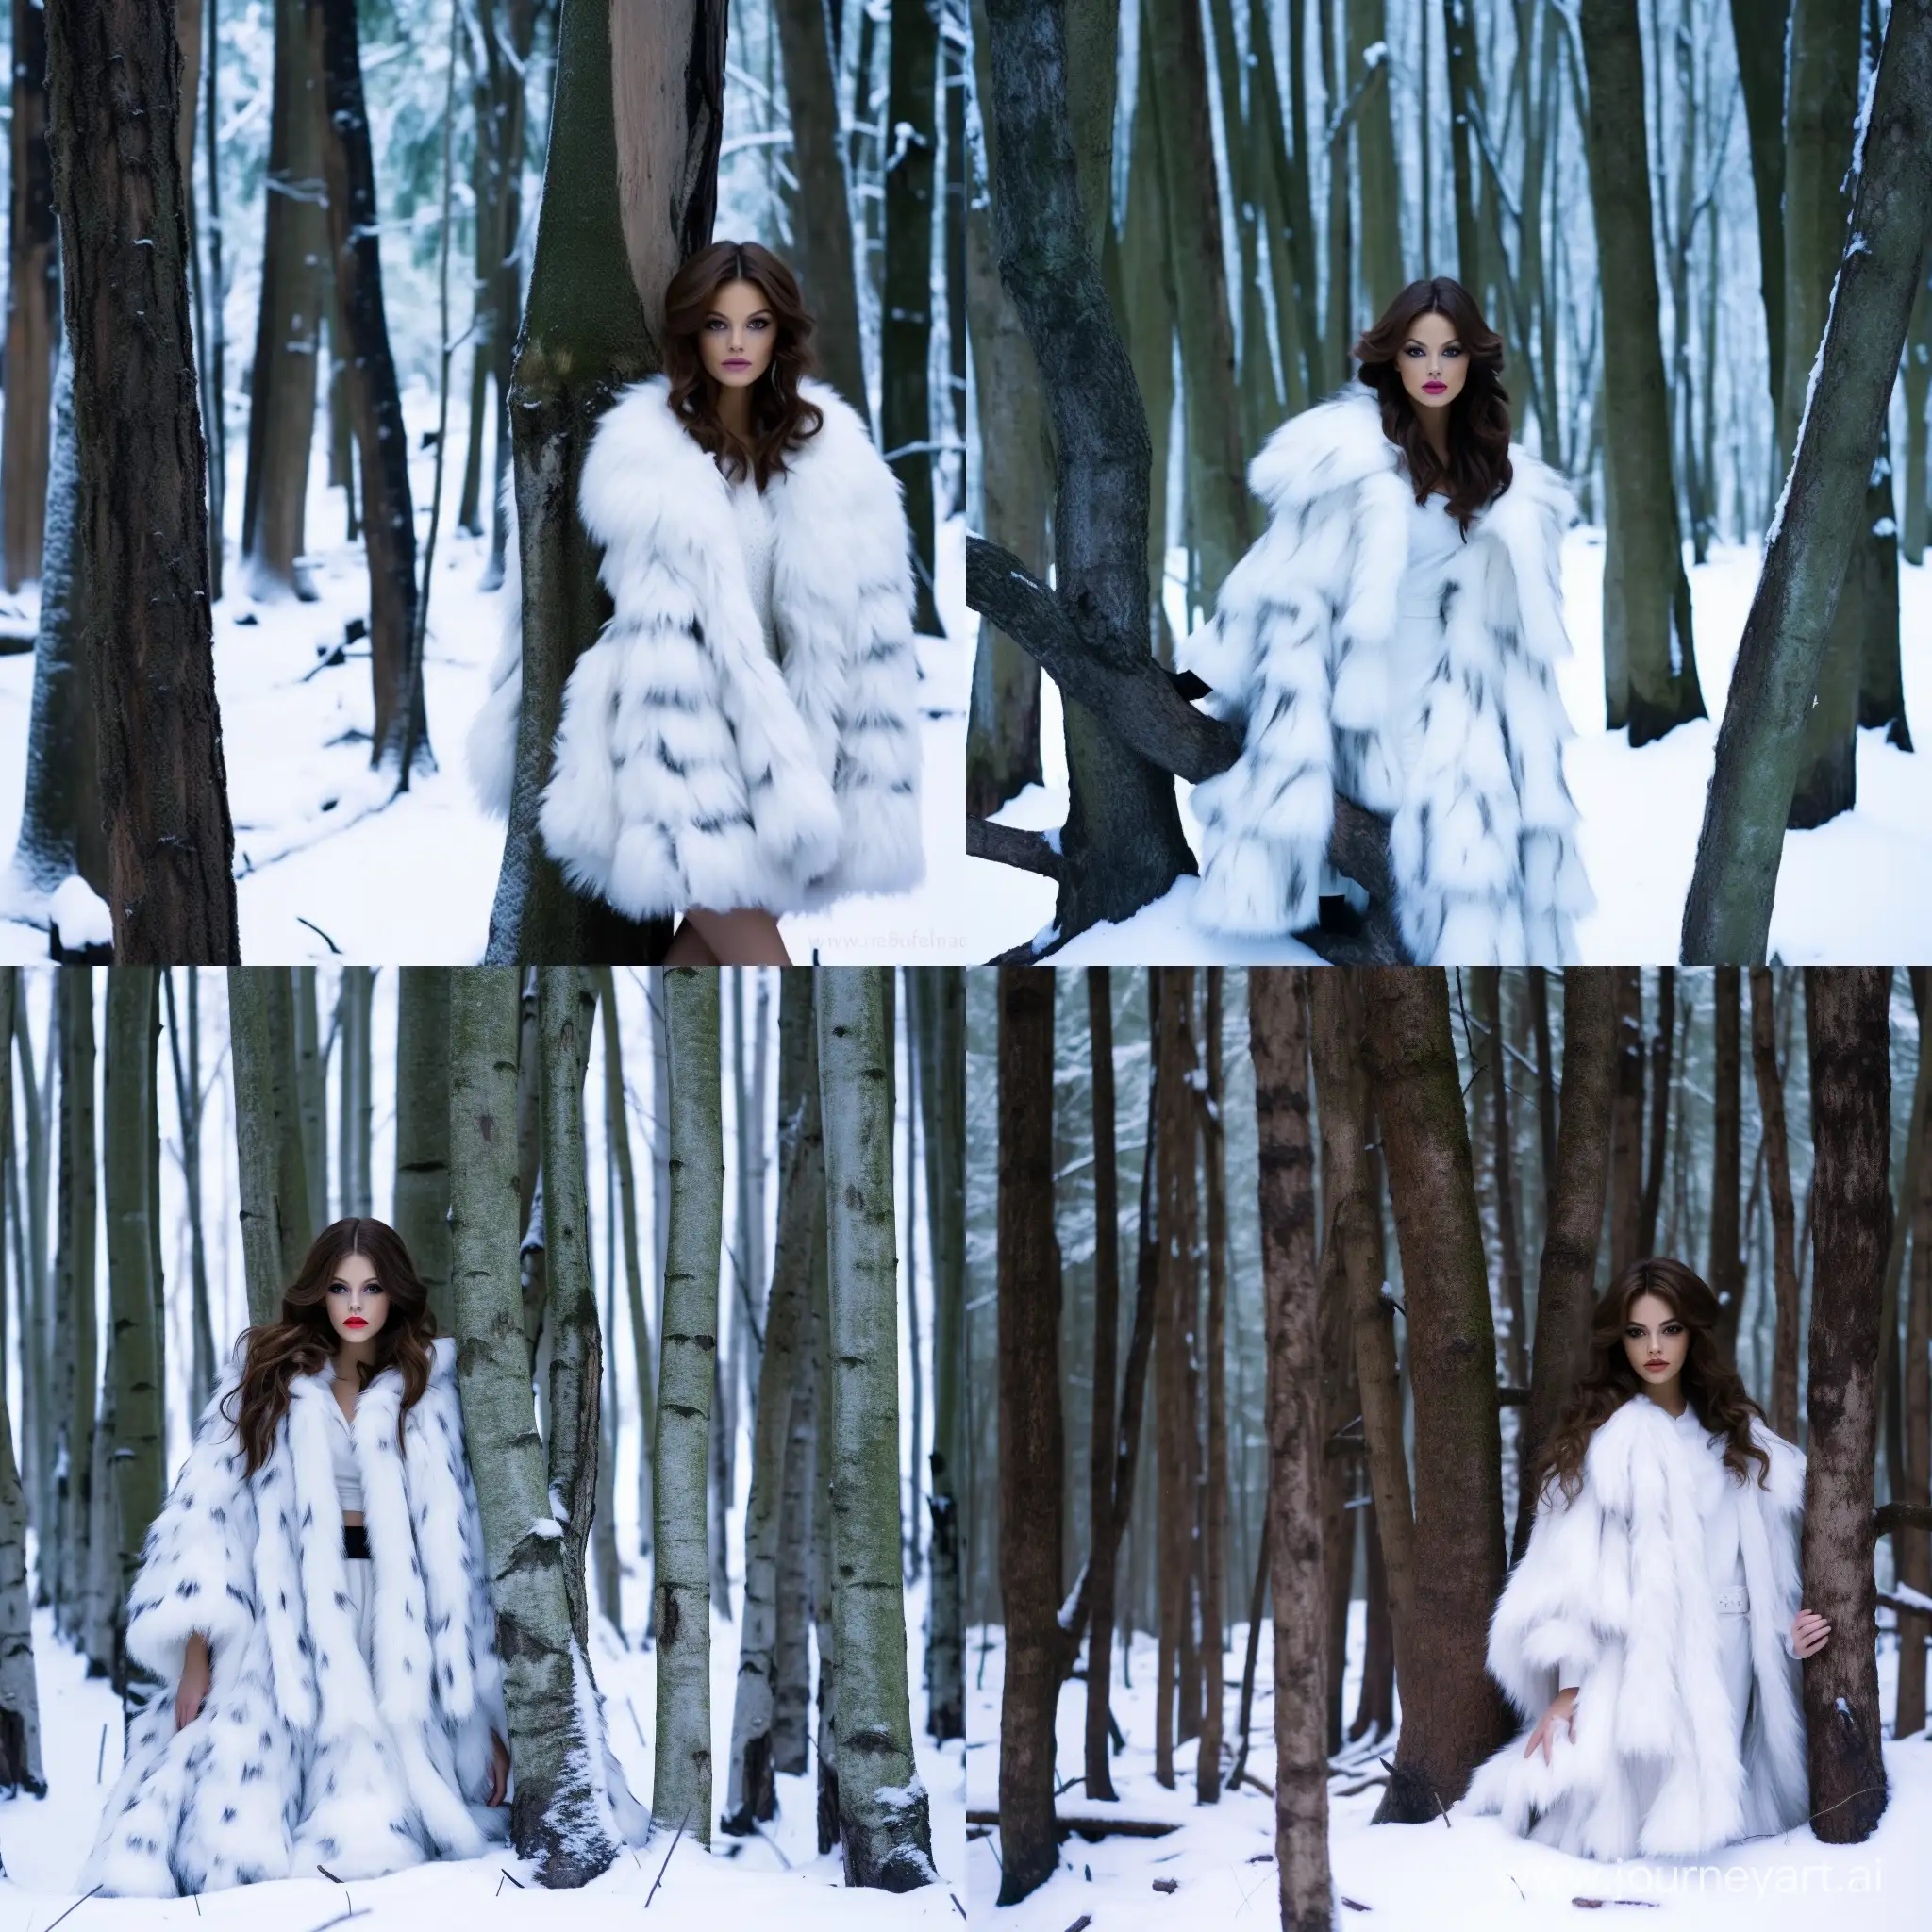 Enchanting-Brunette-Model-in-a-Winter-Wonderland-Photoshoot